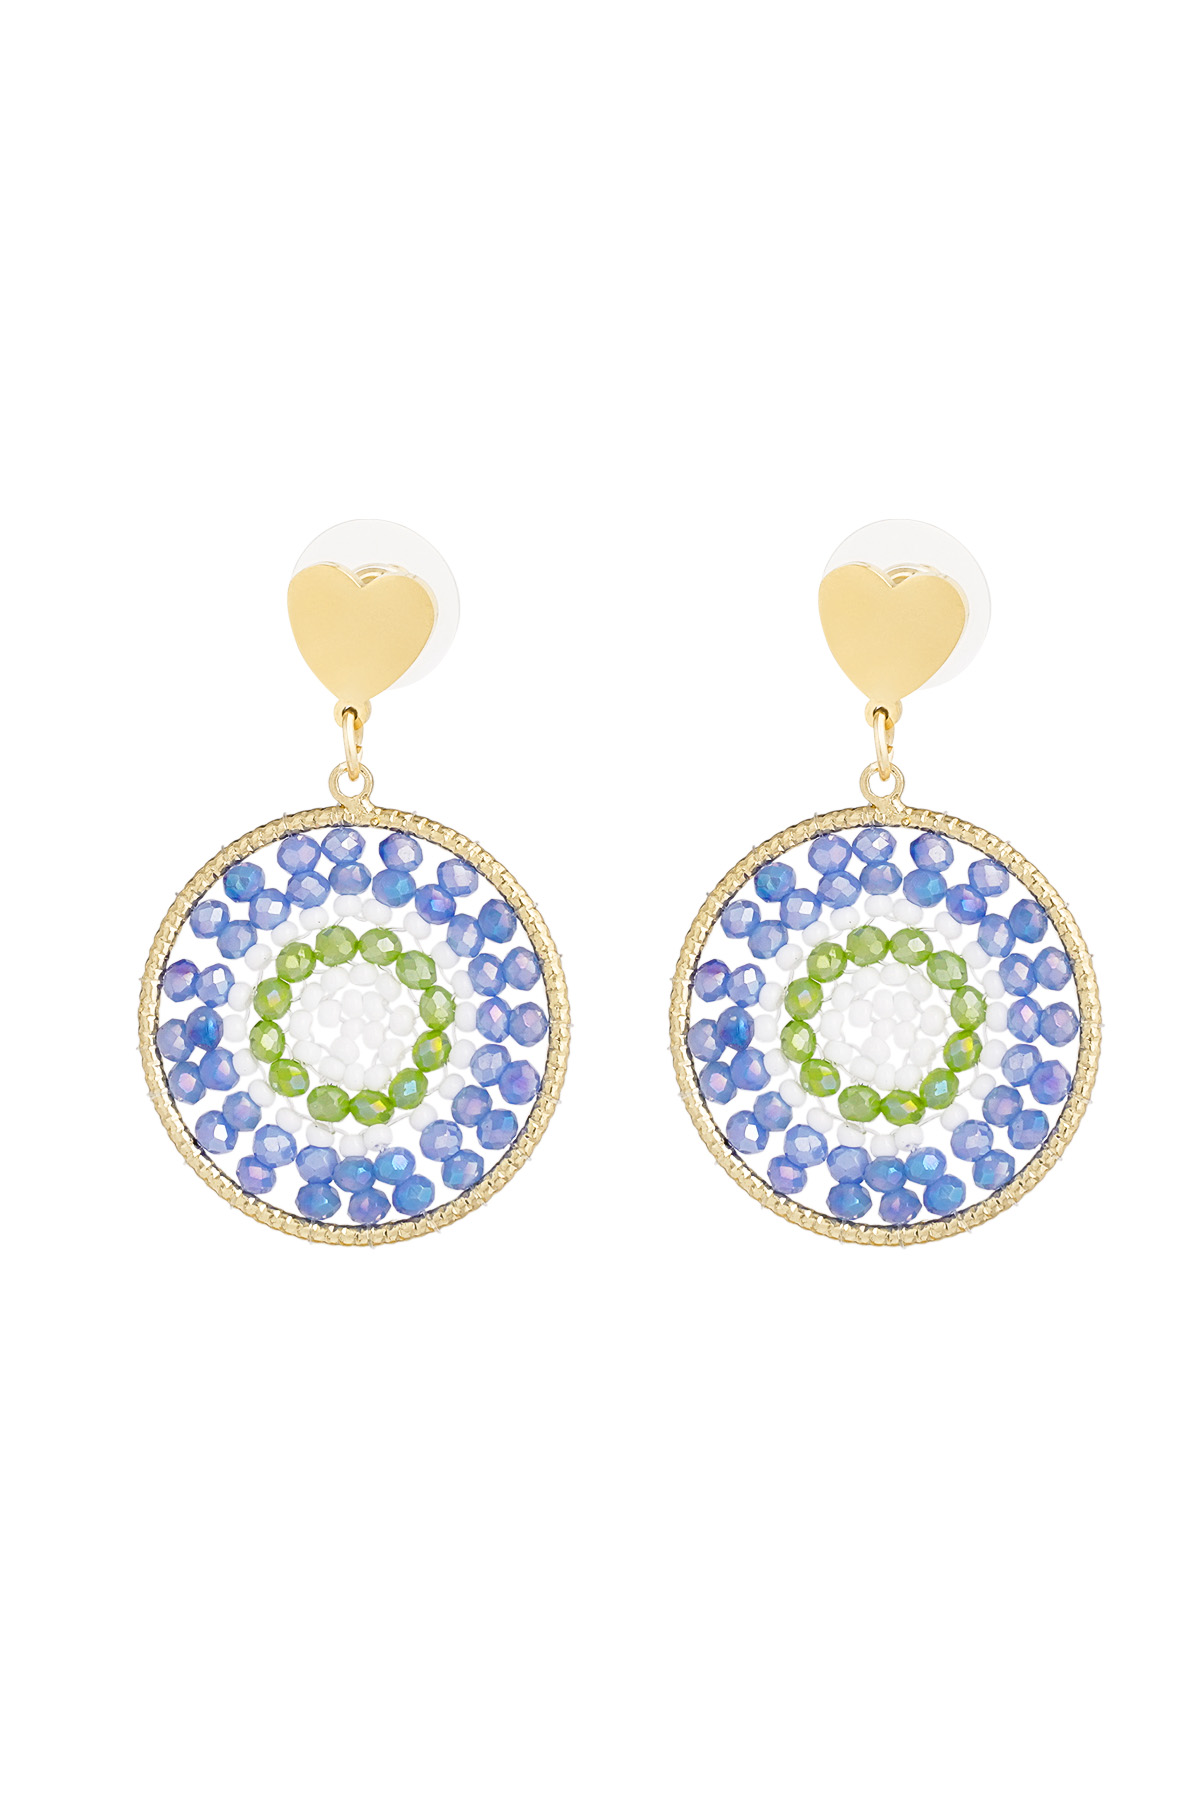 Mandala earrings with heart - blue/green 